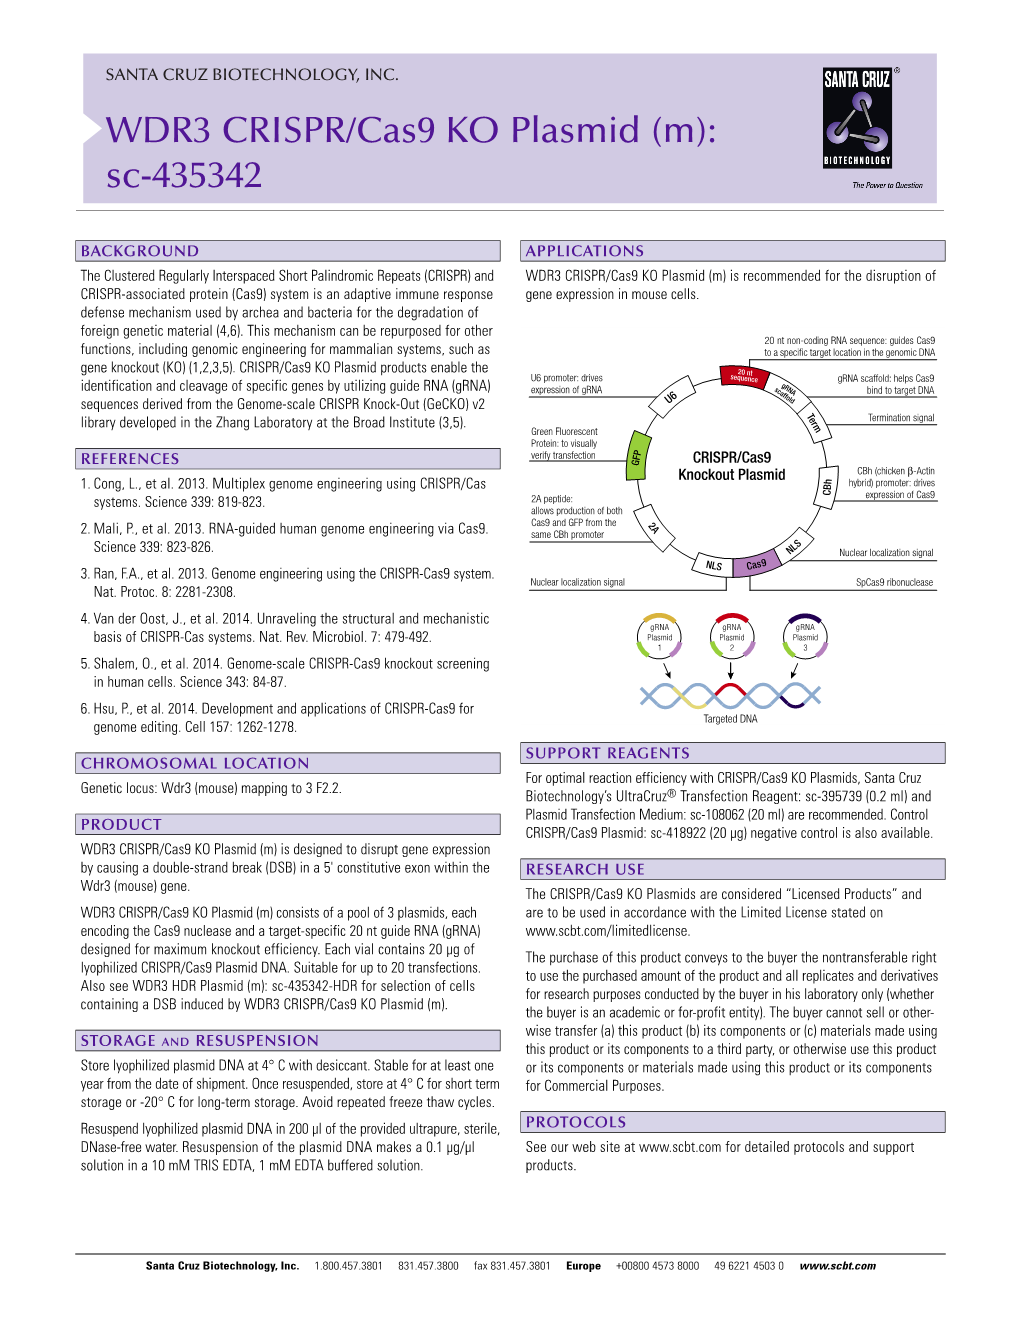 WDR3 CRISPR/Cas9 KO Plasmid (M): Sc-435342